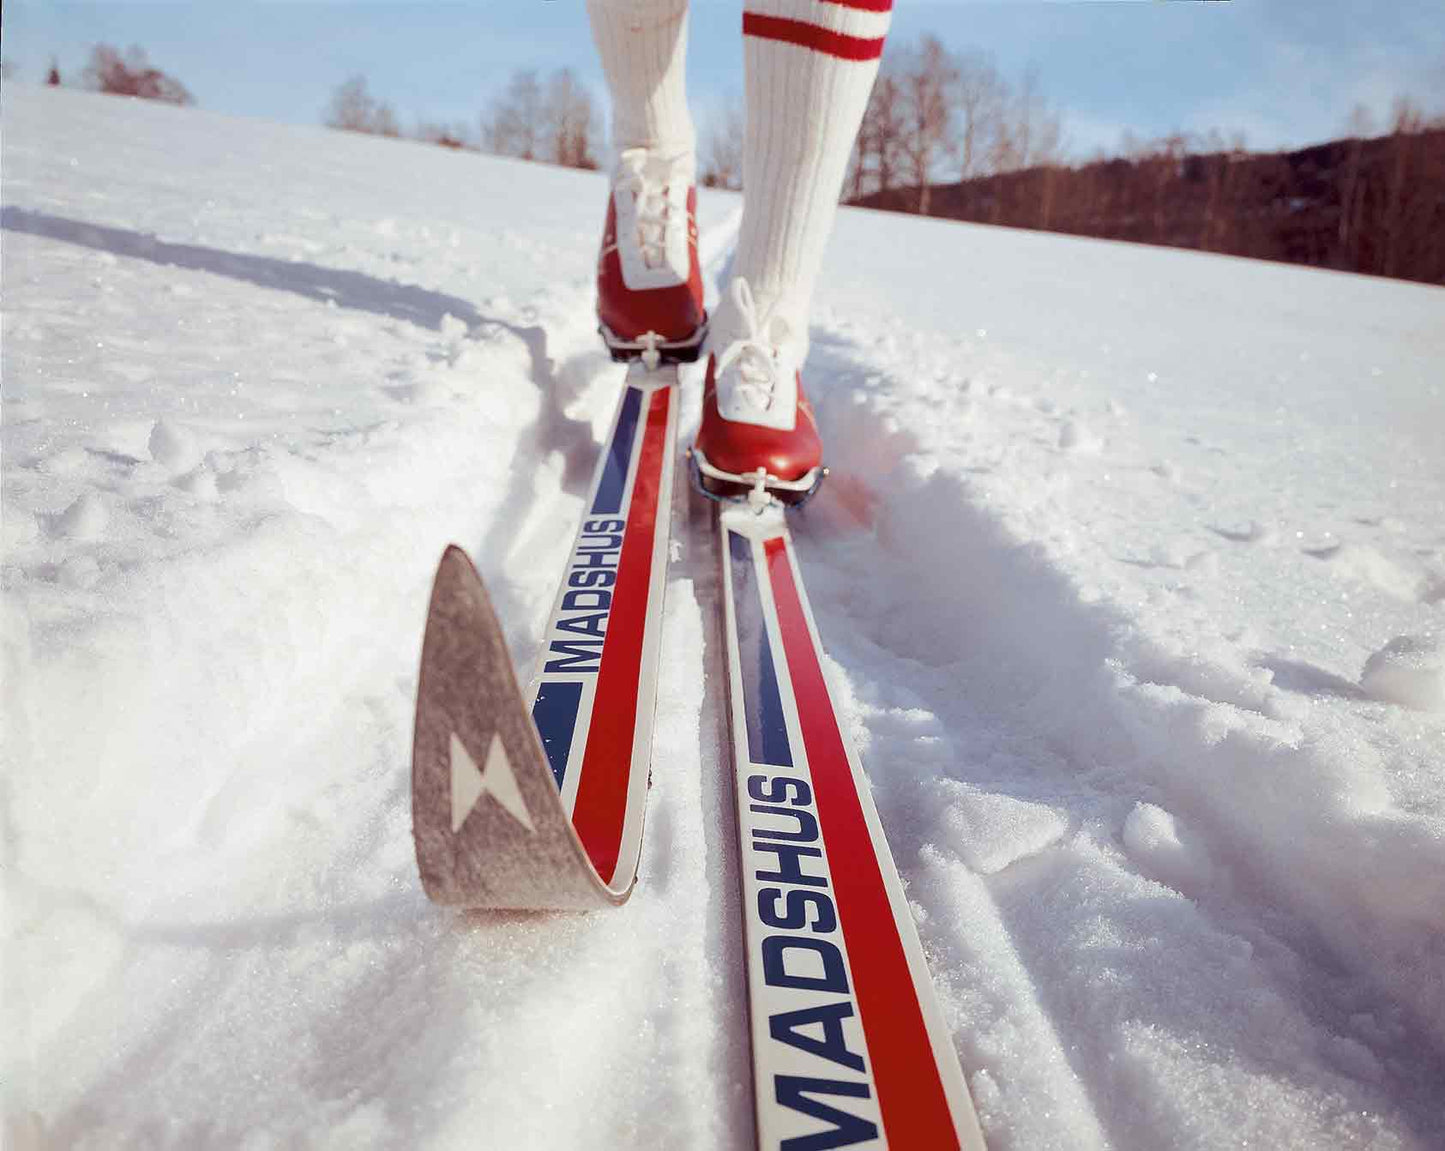 Ski: Cross-country classique ski tuning | Tuning Ski de fond Classique